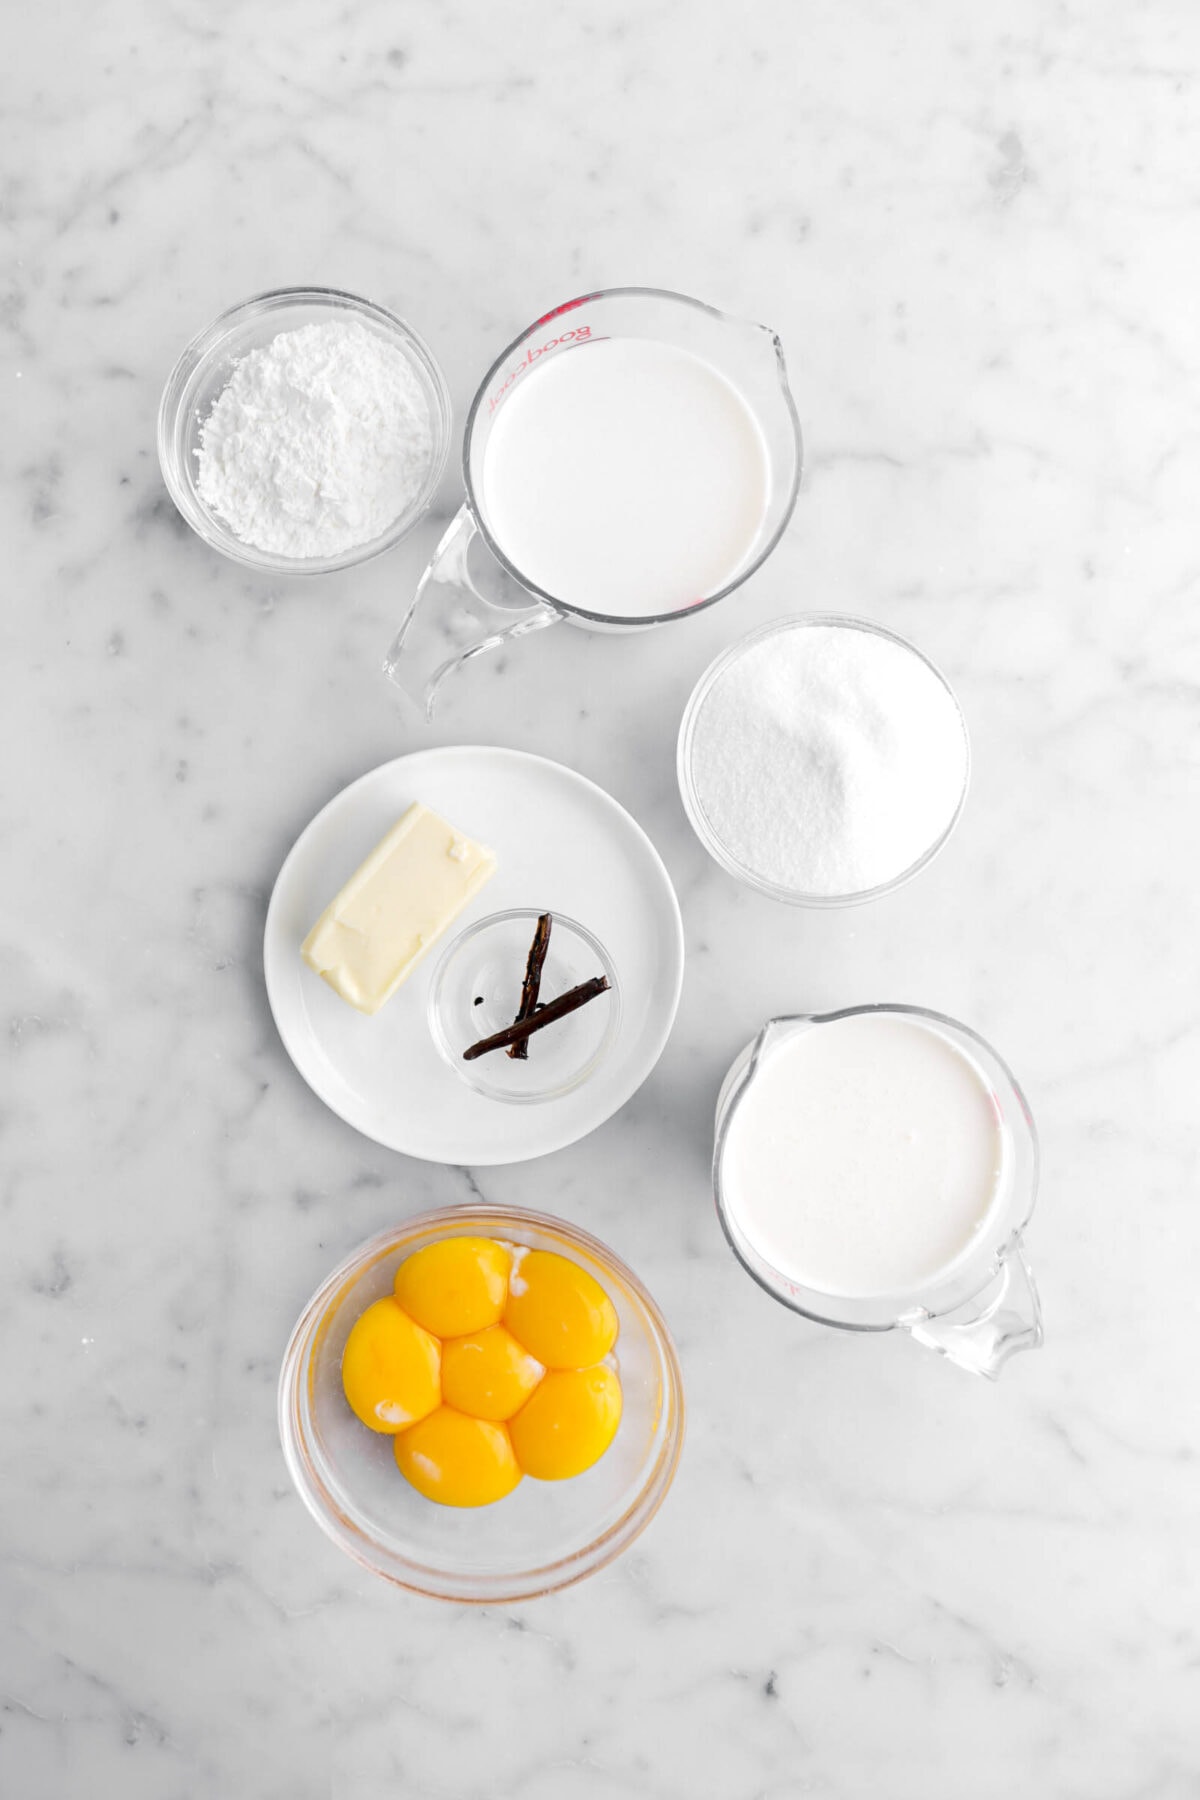 corn starch, milk, sugar, butter, vanilla bean, cream, and egg yolks on marble surface.